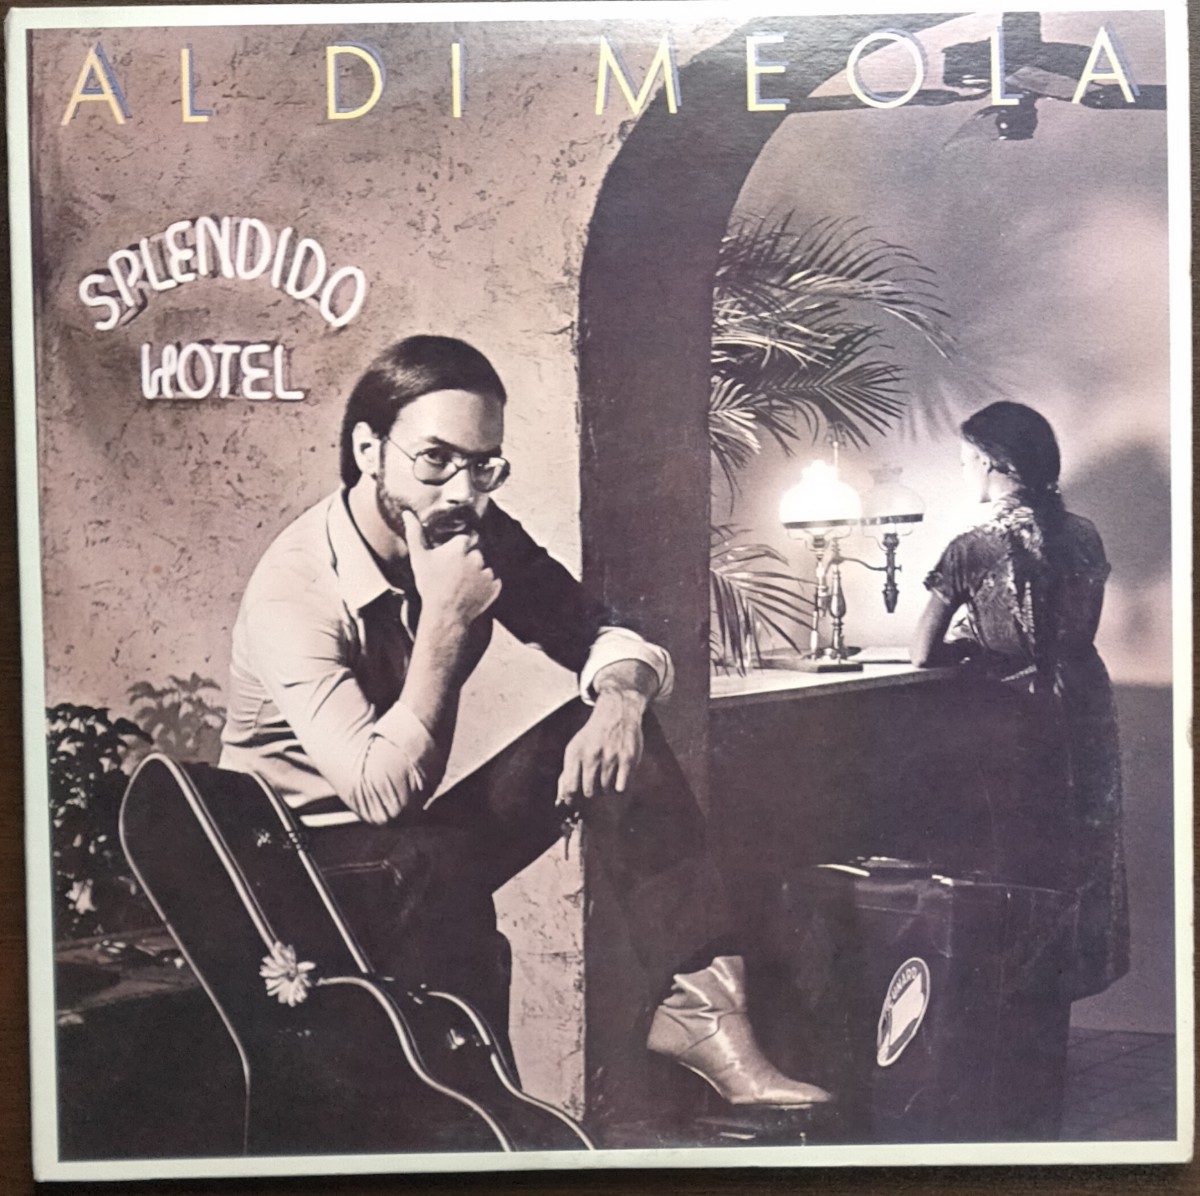 AL DI MEOLA Splendido Hotel 2枚組 美盤_画像1